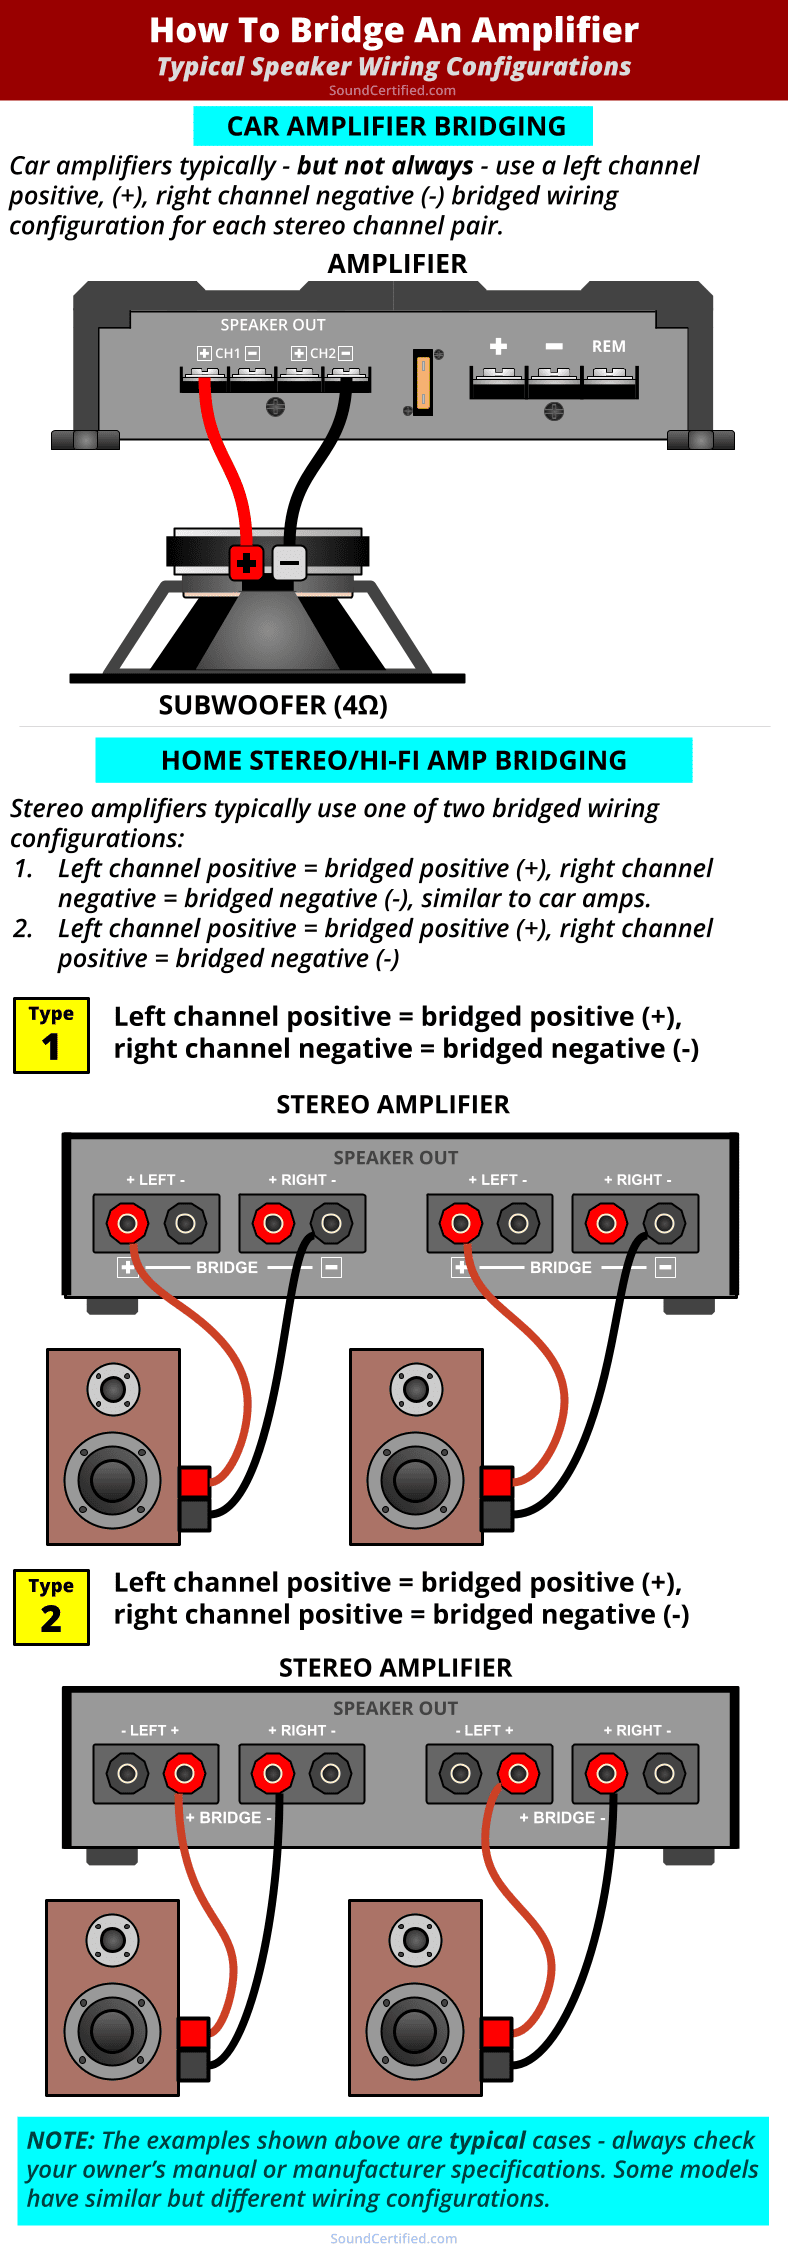 how to bridge an amplifier wiring diagram